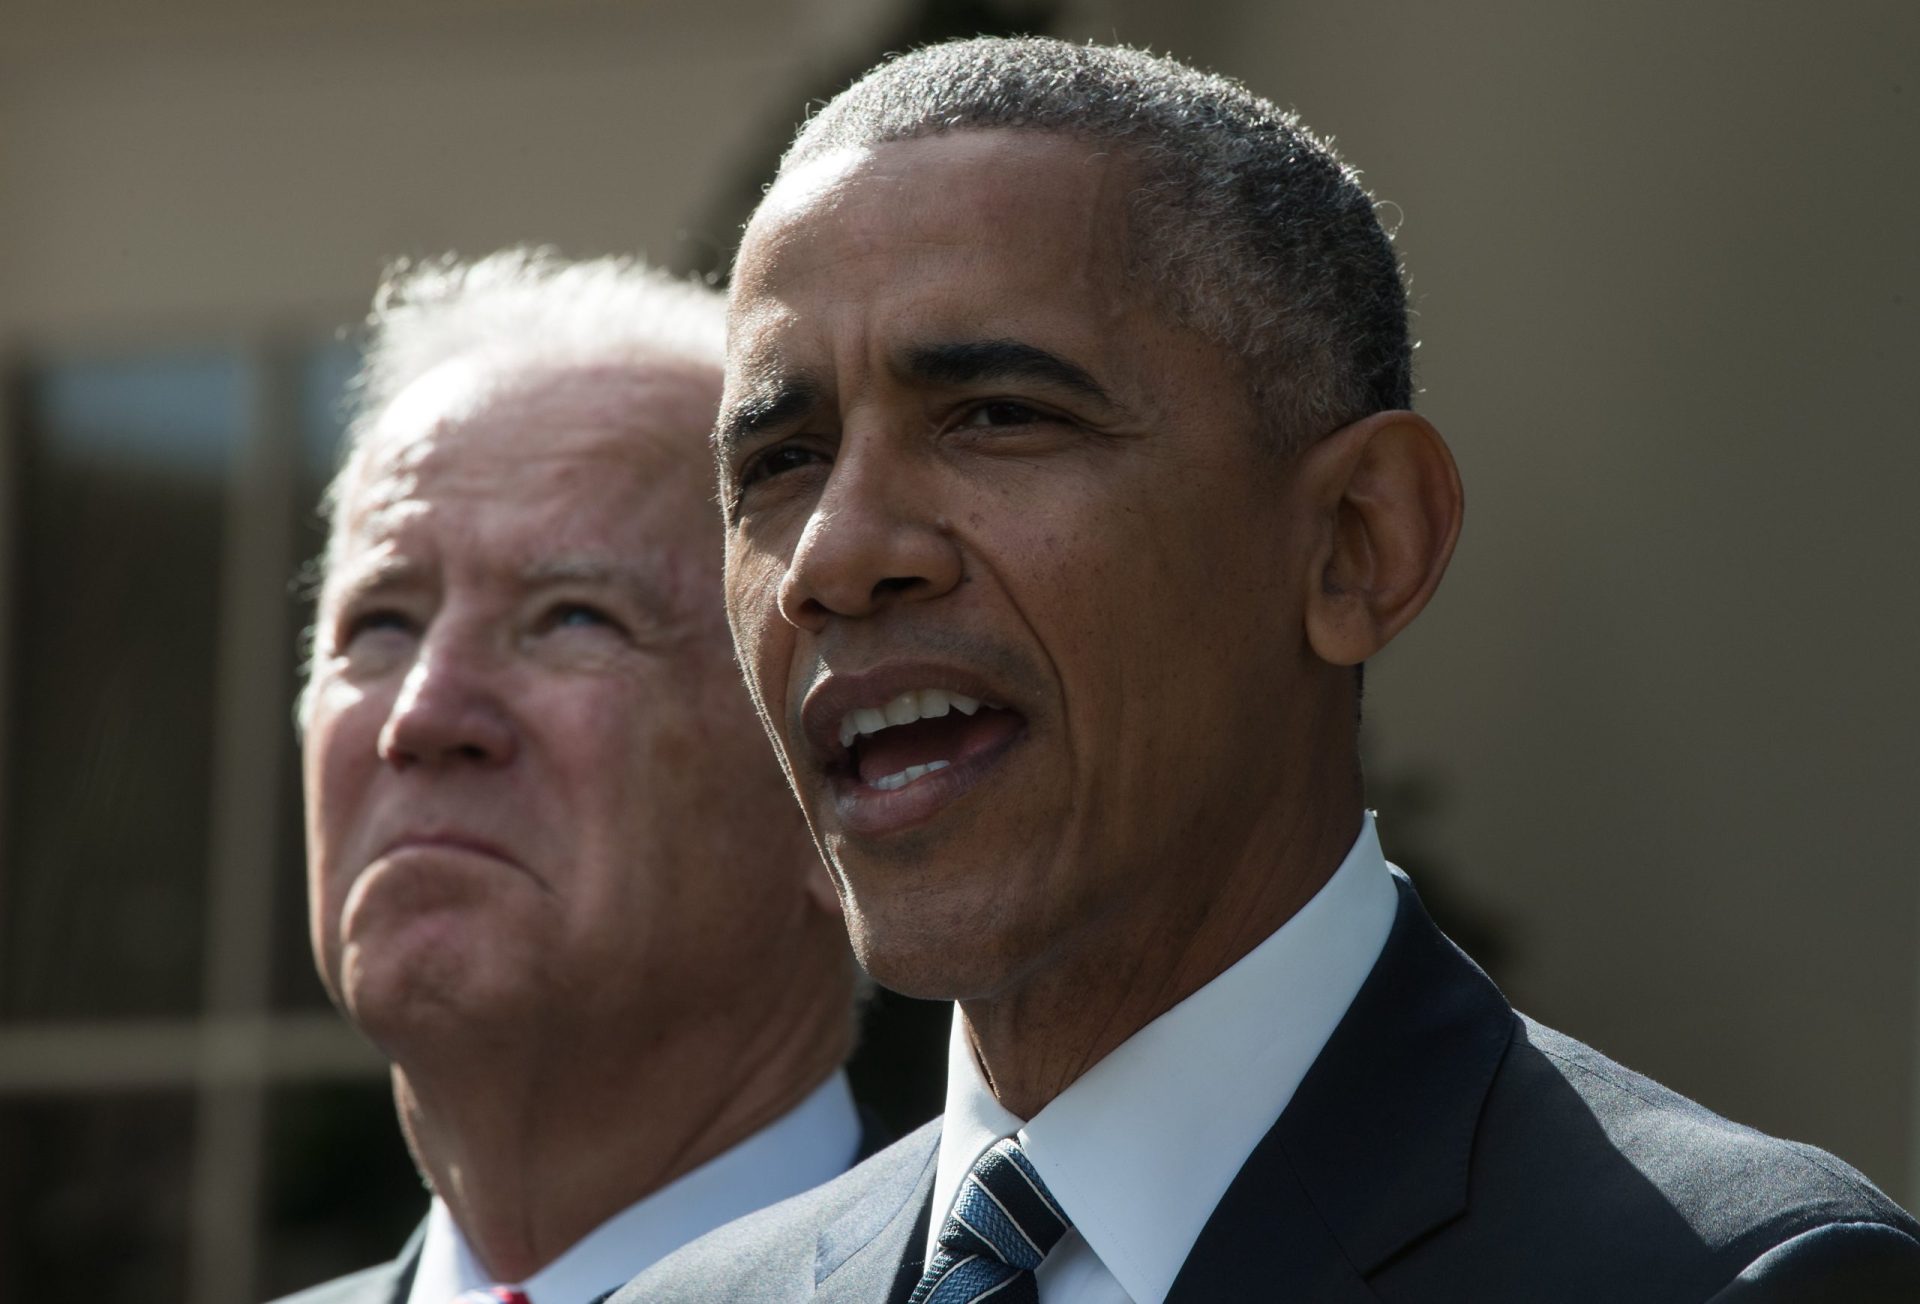 ‘Conversas’ entre Biden e Obama deixam a Internet em delírio